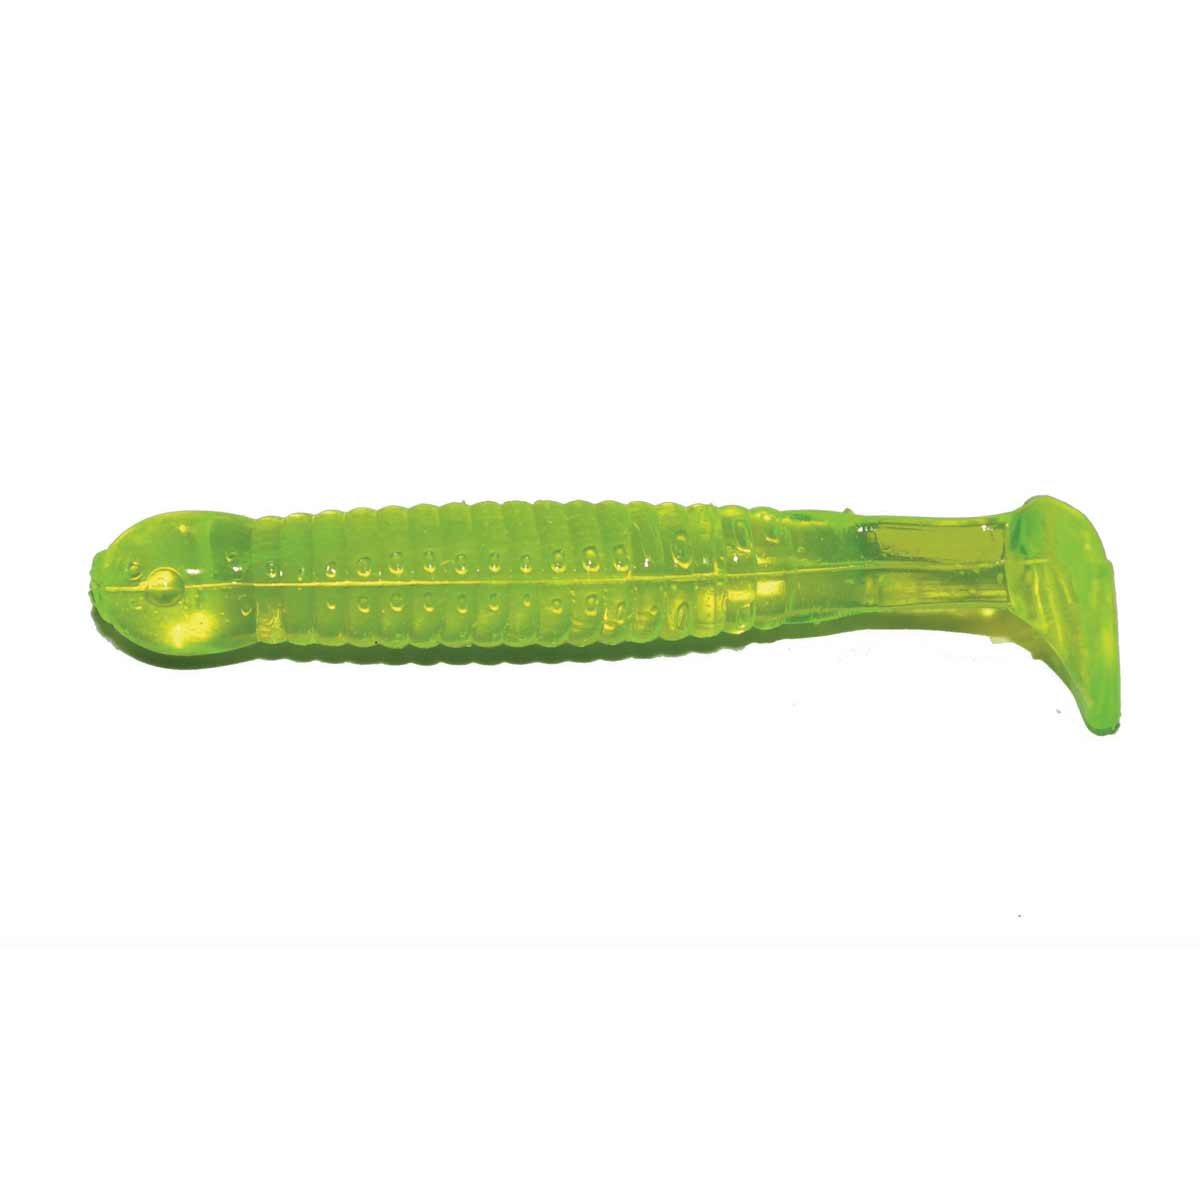 Paddle Tail Grub_Chartreuse